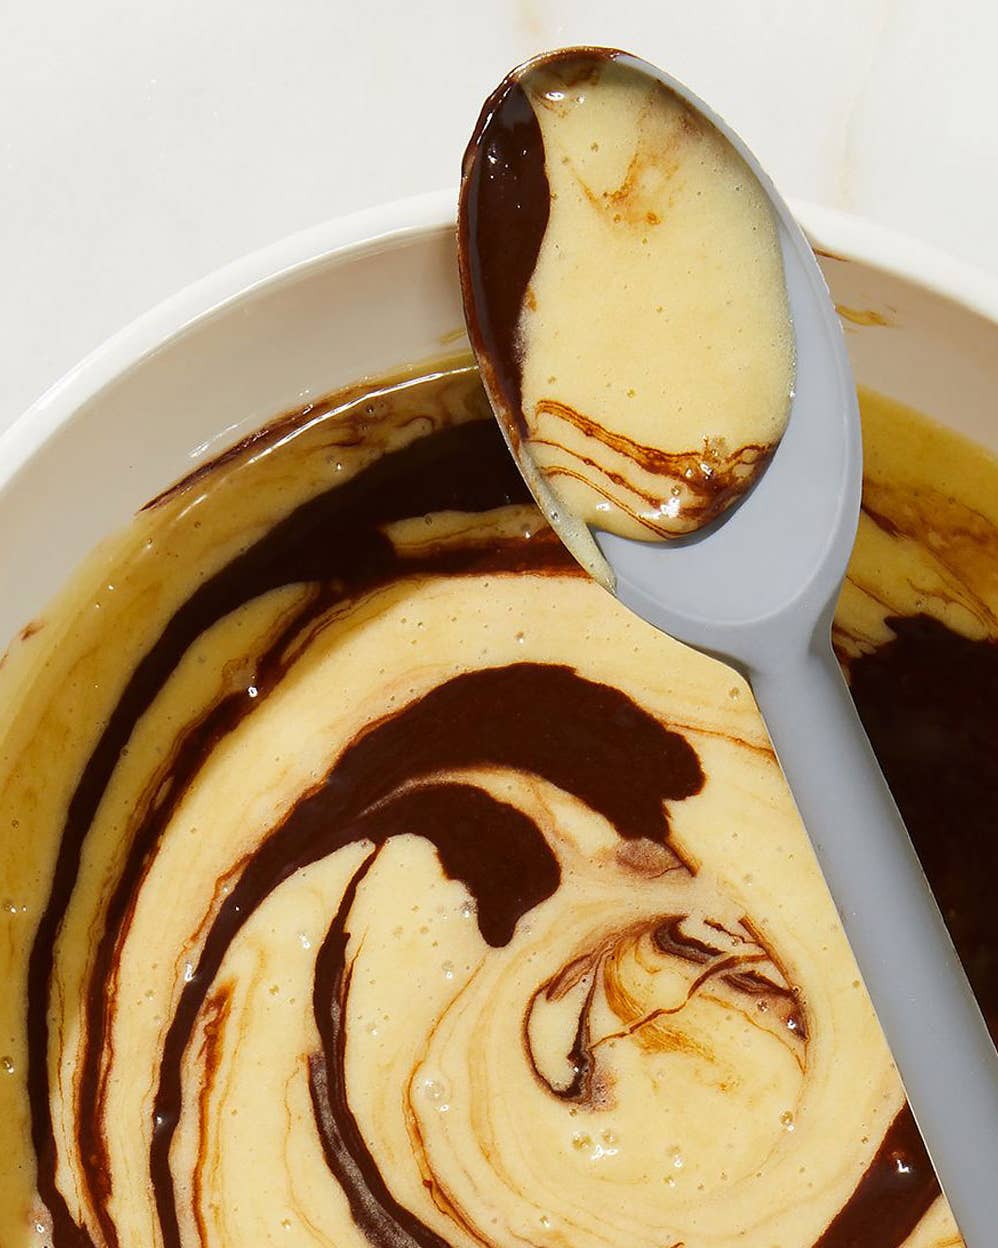 Vanilla and chocolate cake batter swirled together